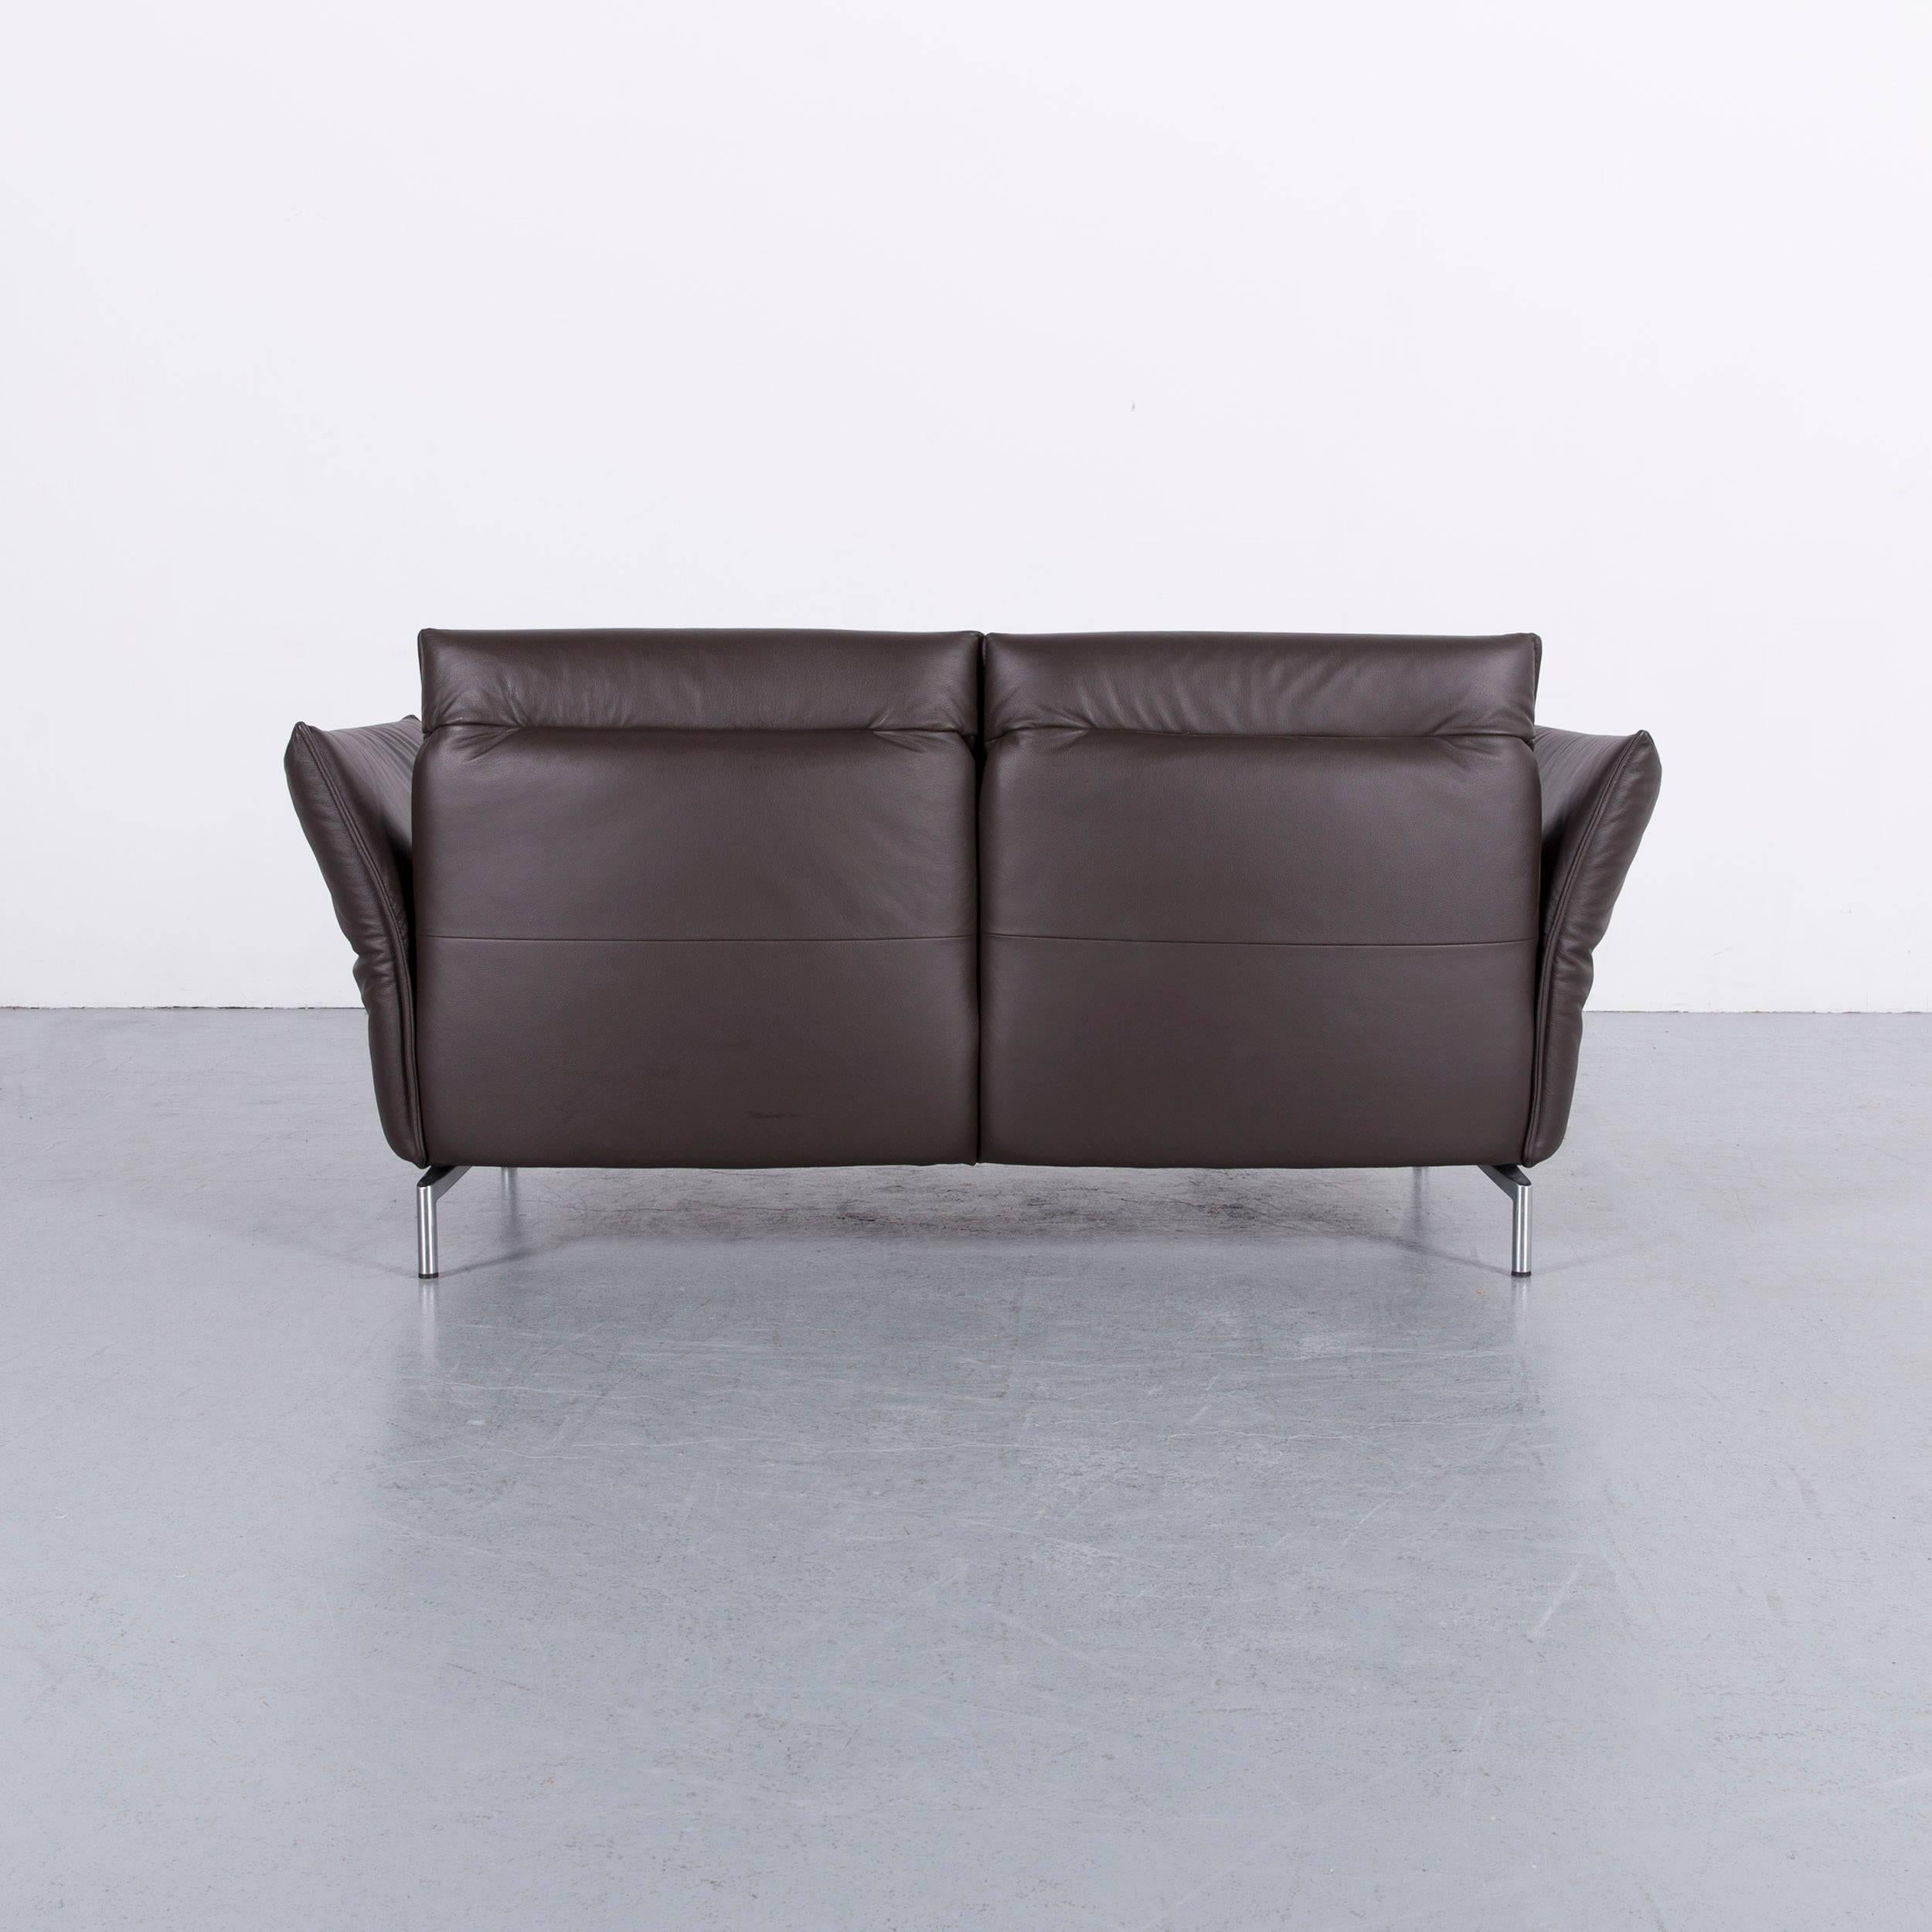 Koinor Vanda Two-Seat Sofa Brown Leather Function 5